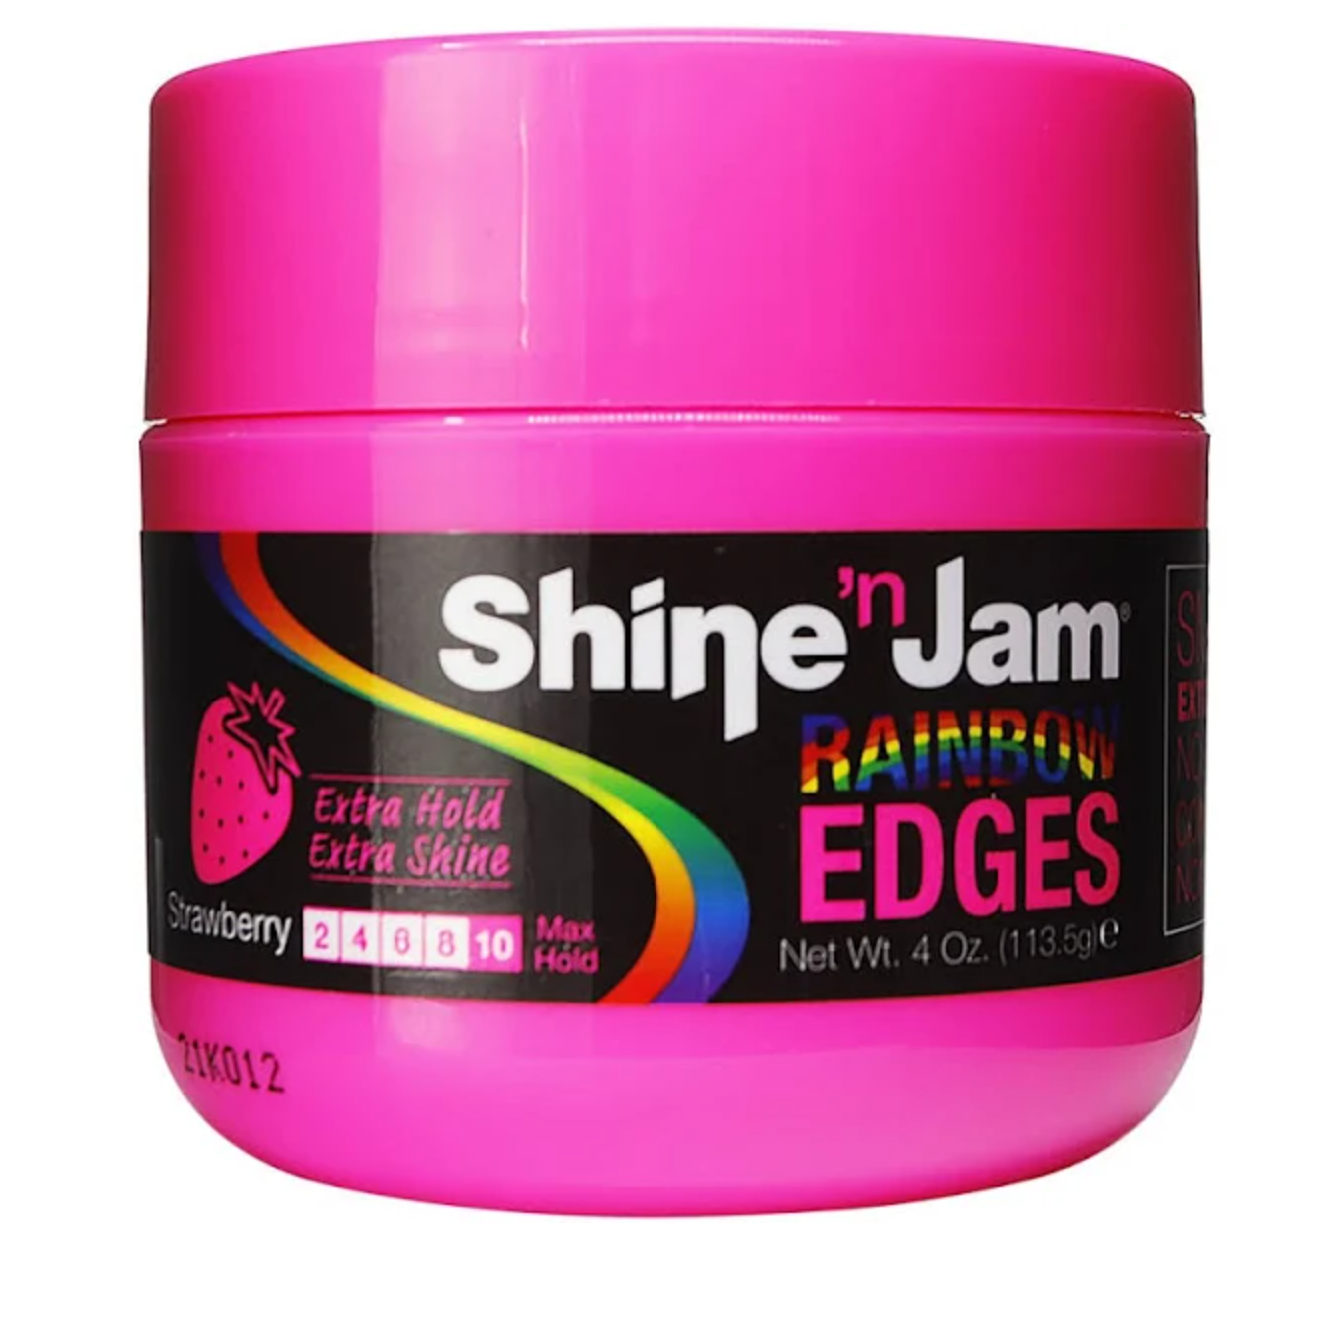 AMPRO SHINE ‘N JAM RAINBOW EDGES EDGE CONTROL GEL